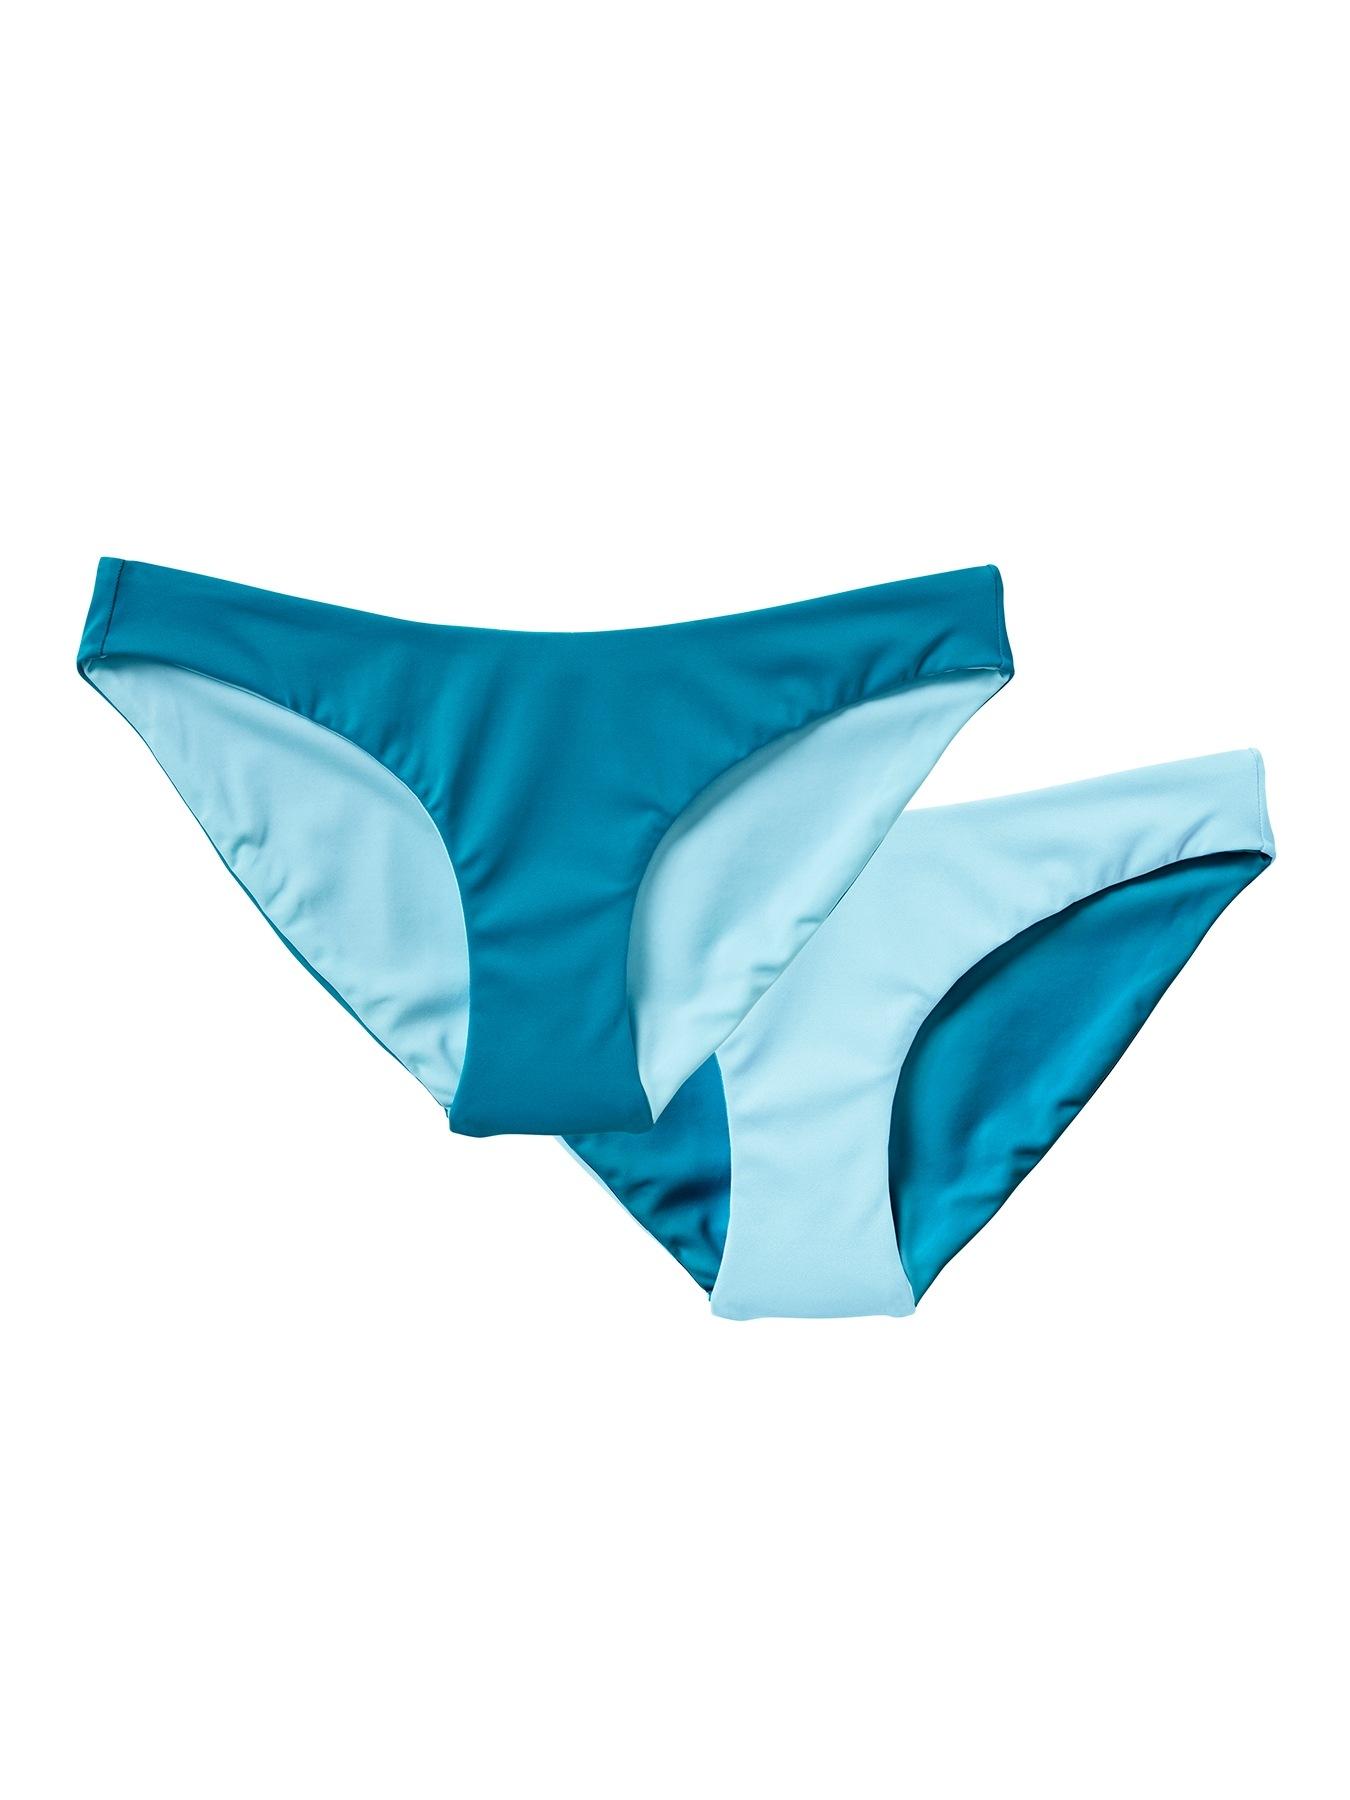 Lycra fabric blue surf bikini string size